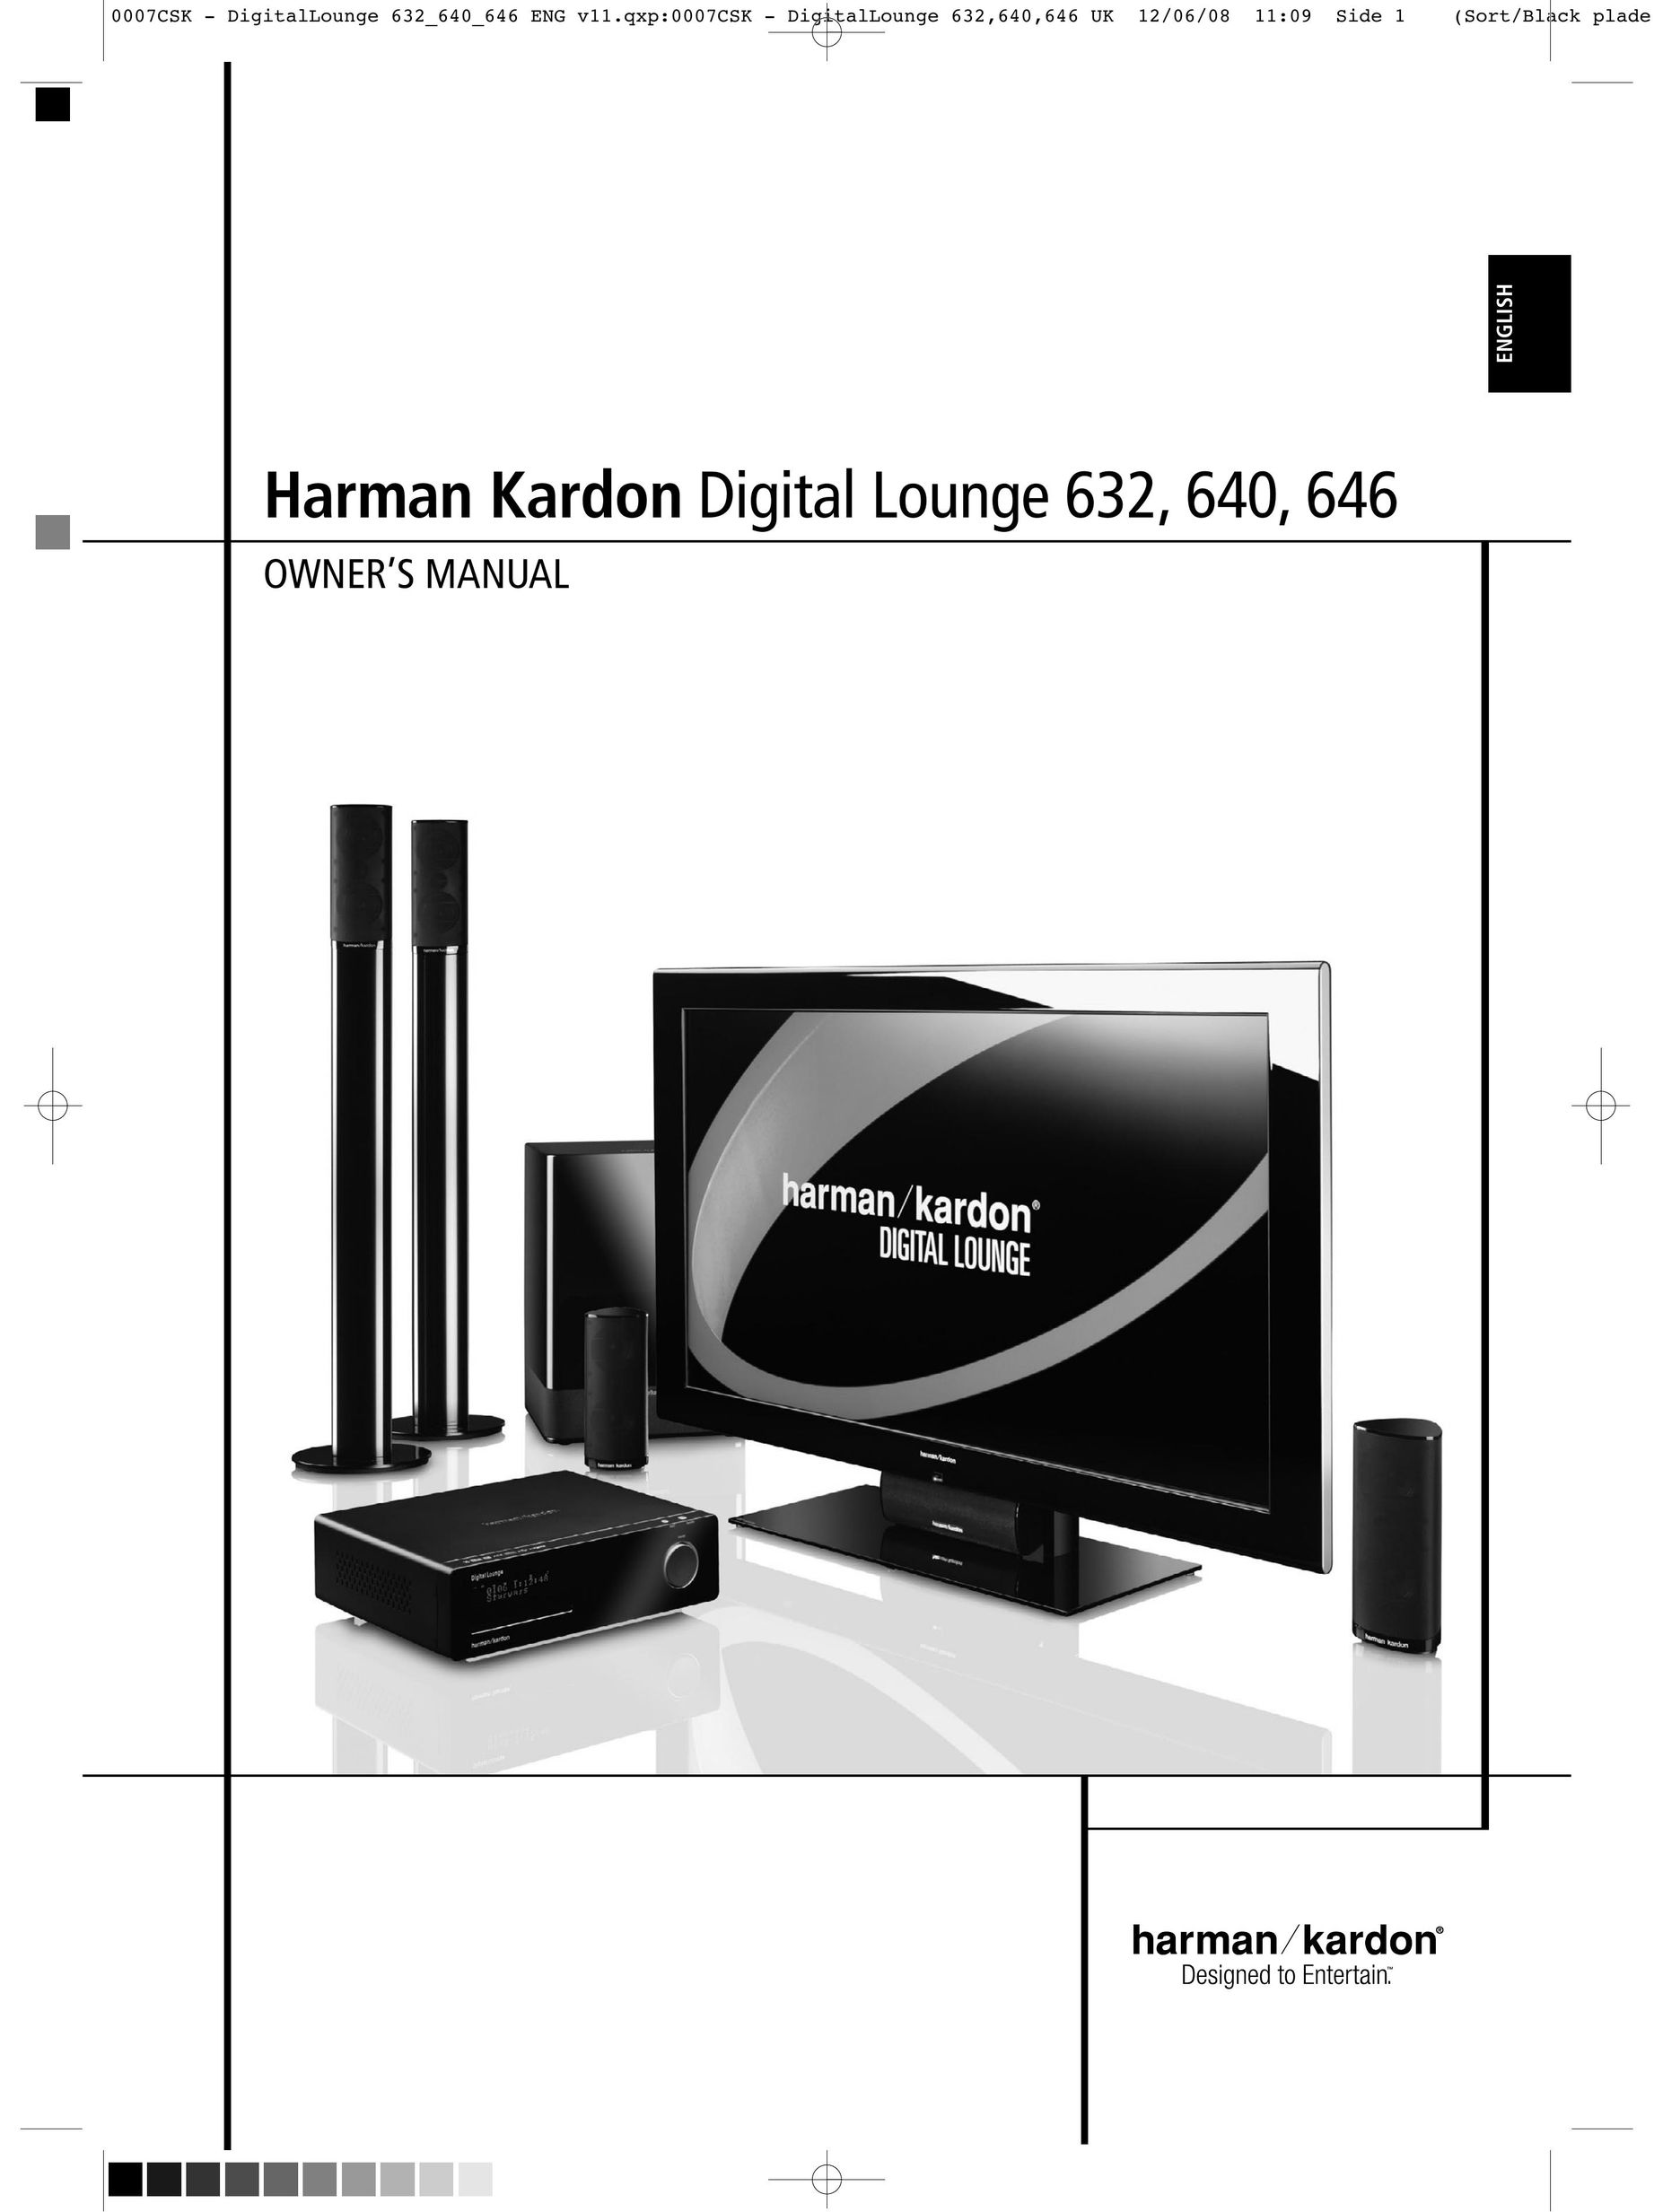 Harman-Kardon 646 Home Theater System User Manual